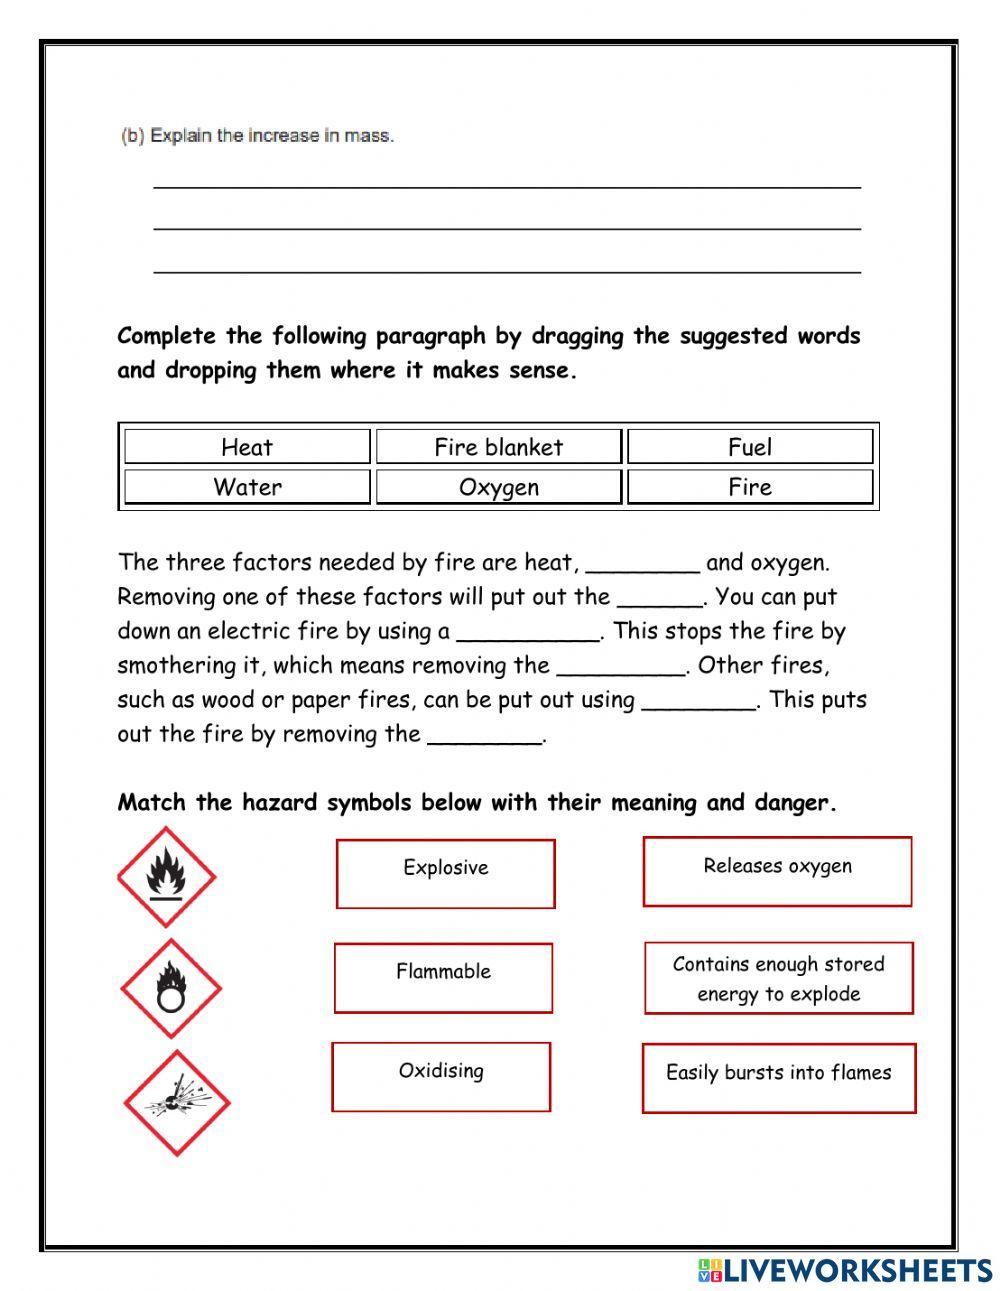 Combustion and fire safety worksheet | Live Worksheets